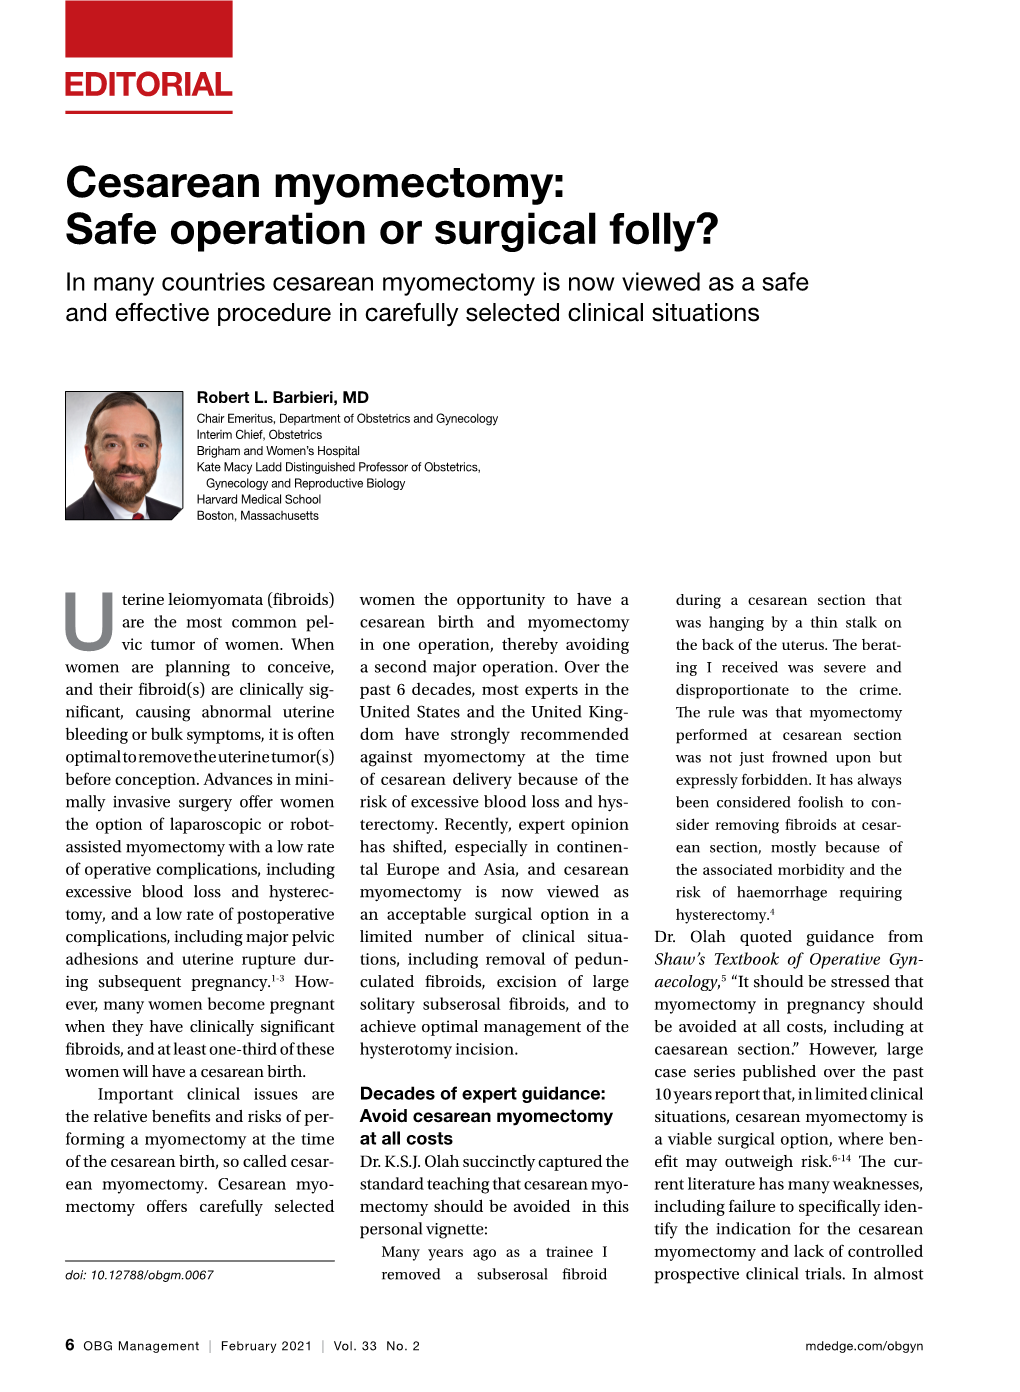 Cesarean Myomectomy: Safe Operation Or Surgical Folly?